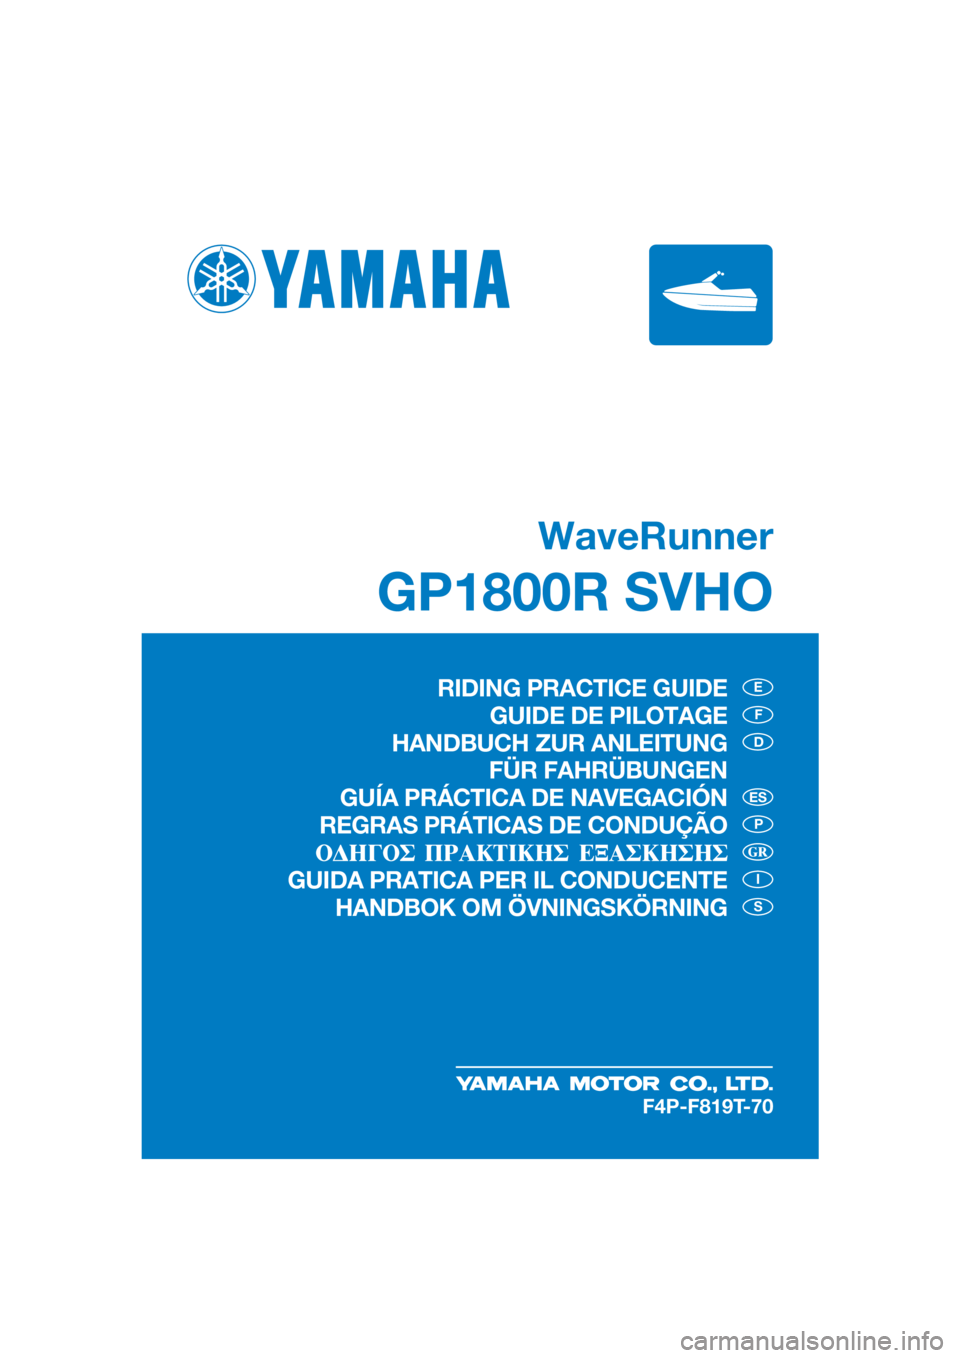 YAMAHA GP1800R SVHO 2021  Manuale de Empleo (in Spanish) 